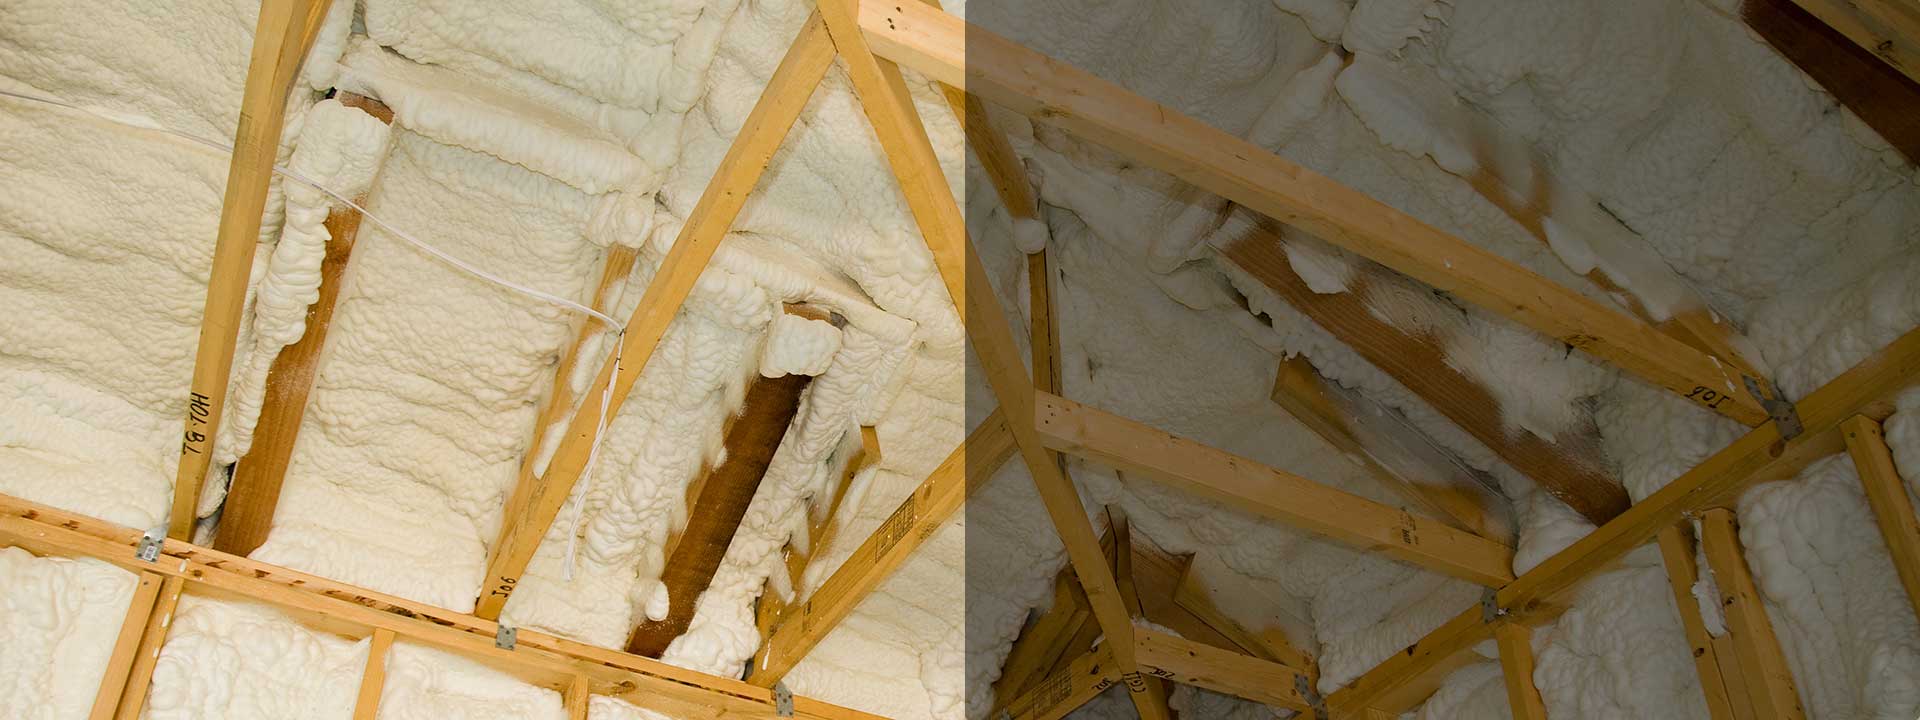 Spray foam insulation removal